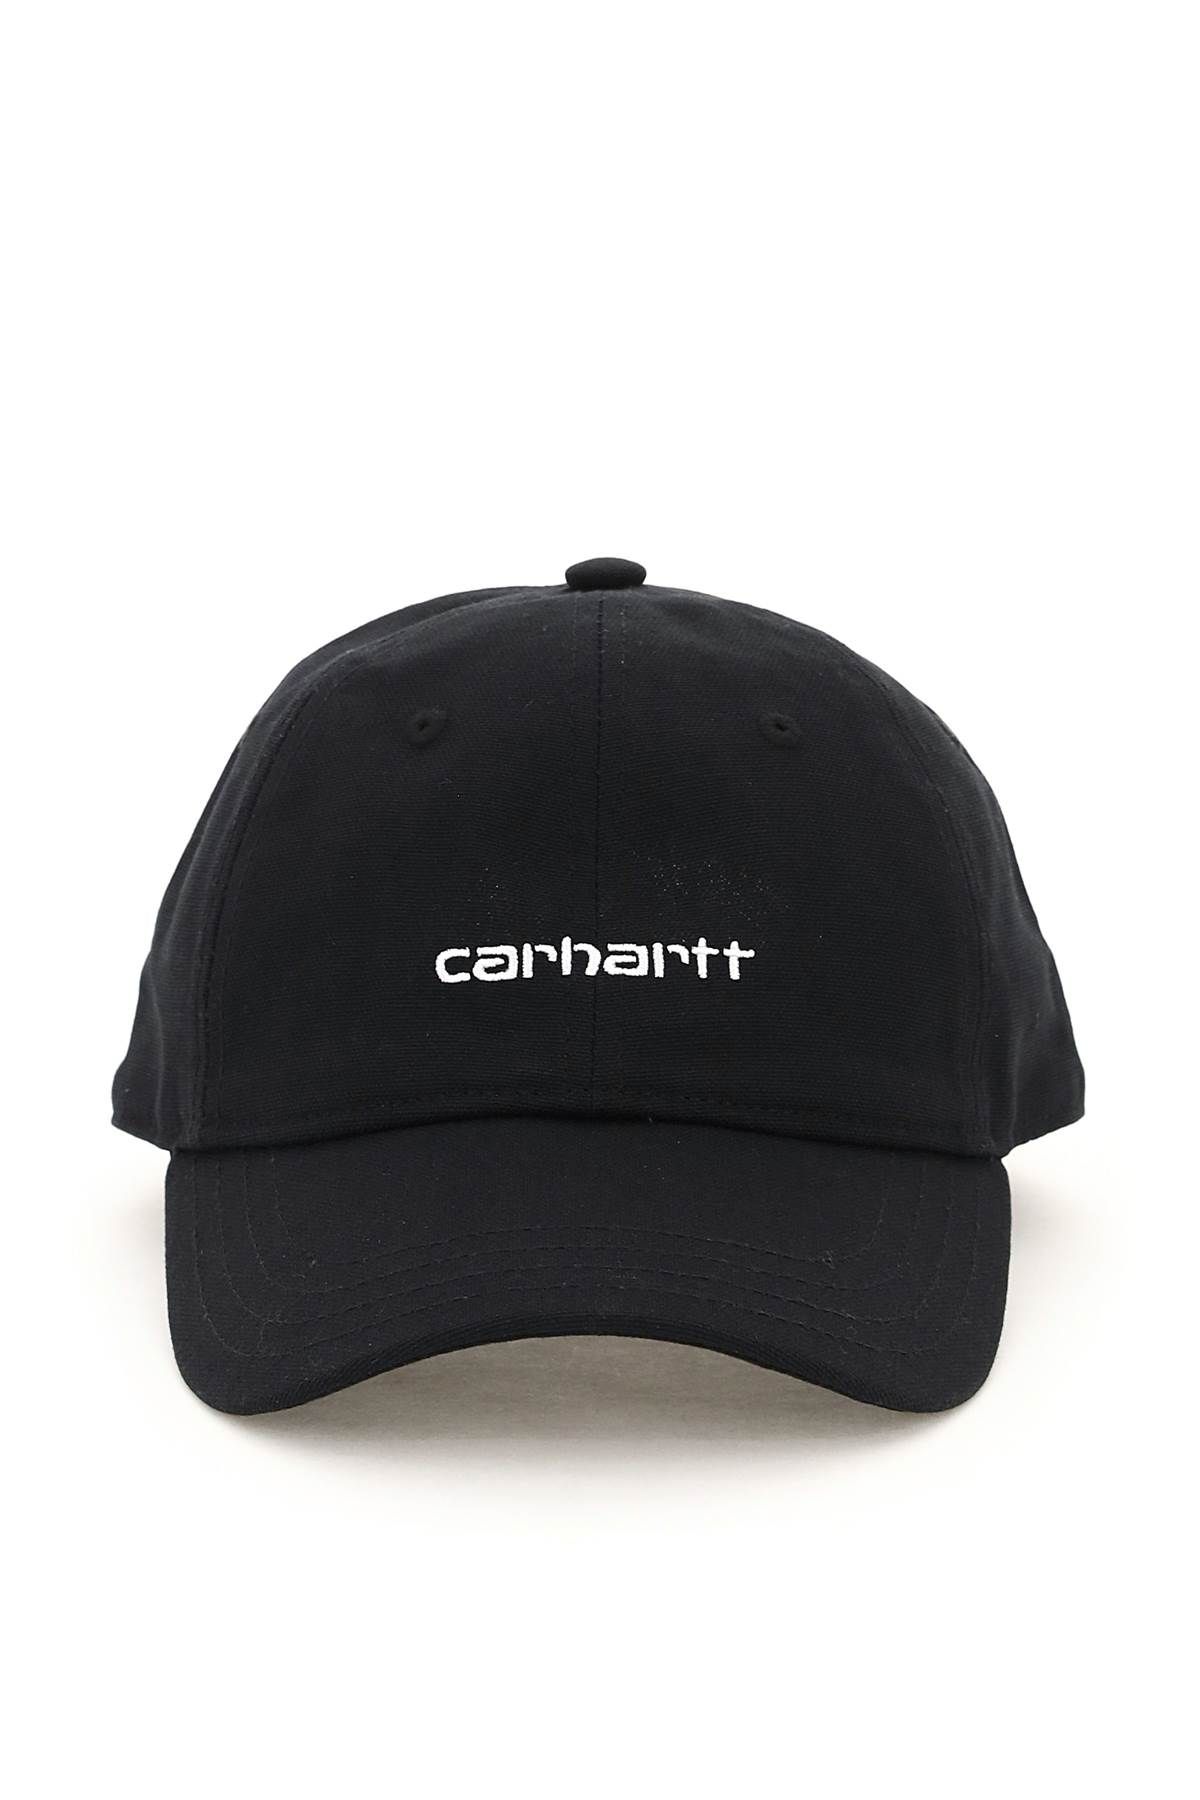 Carhartt Canvas Script Baseball Cap In Black